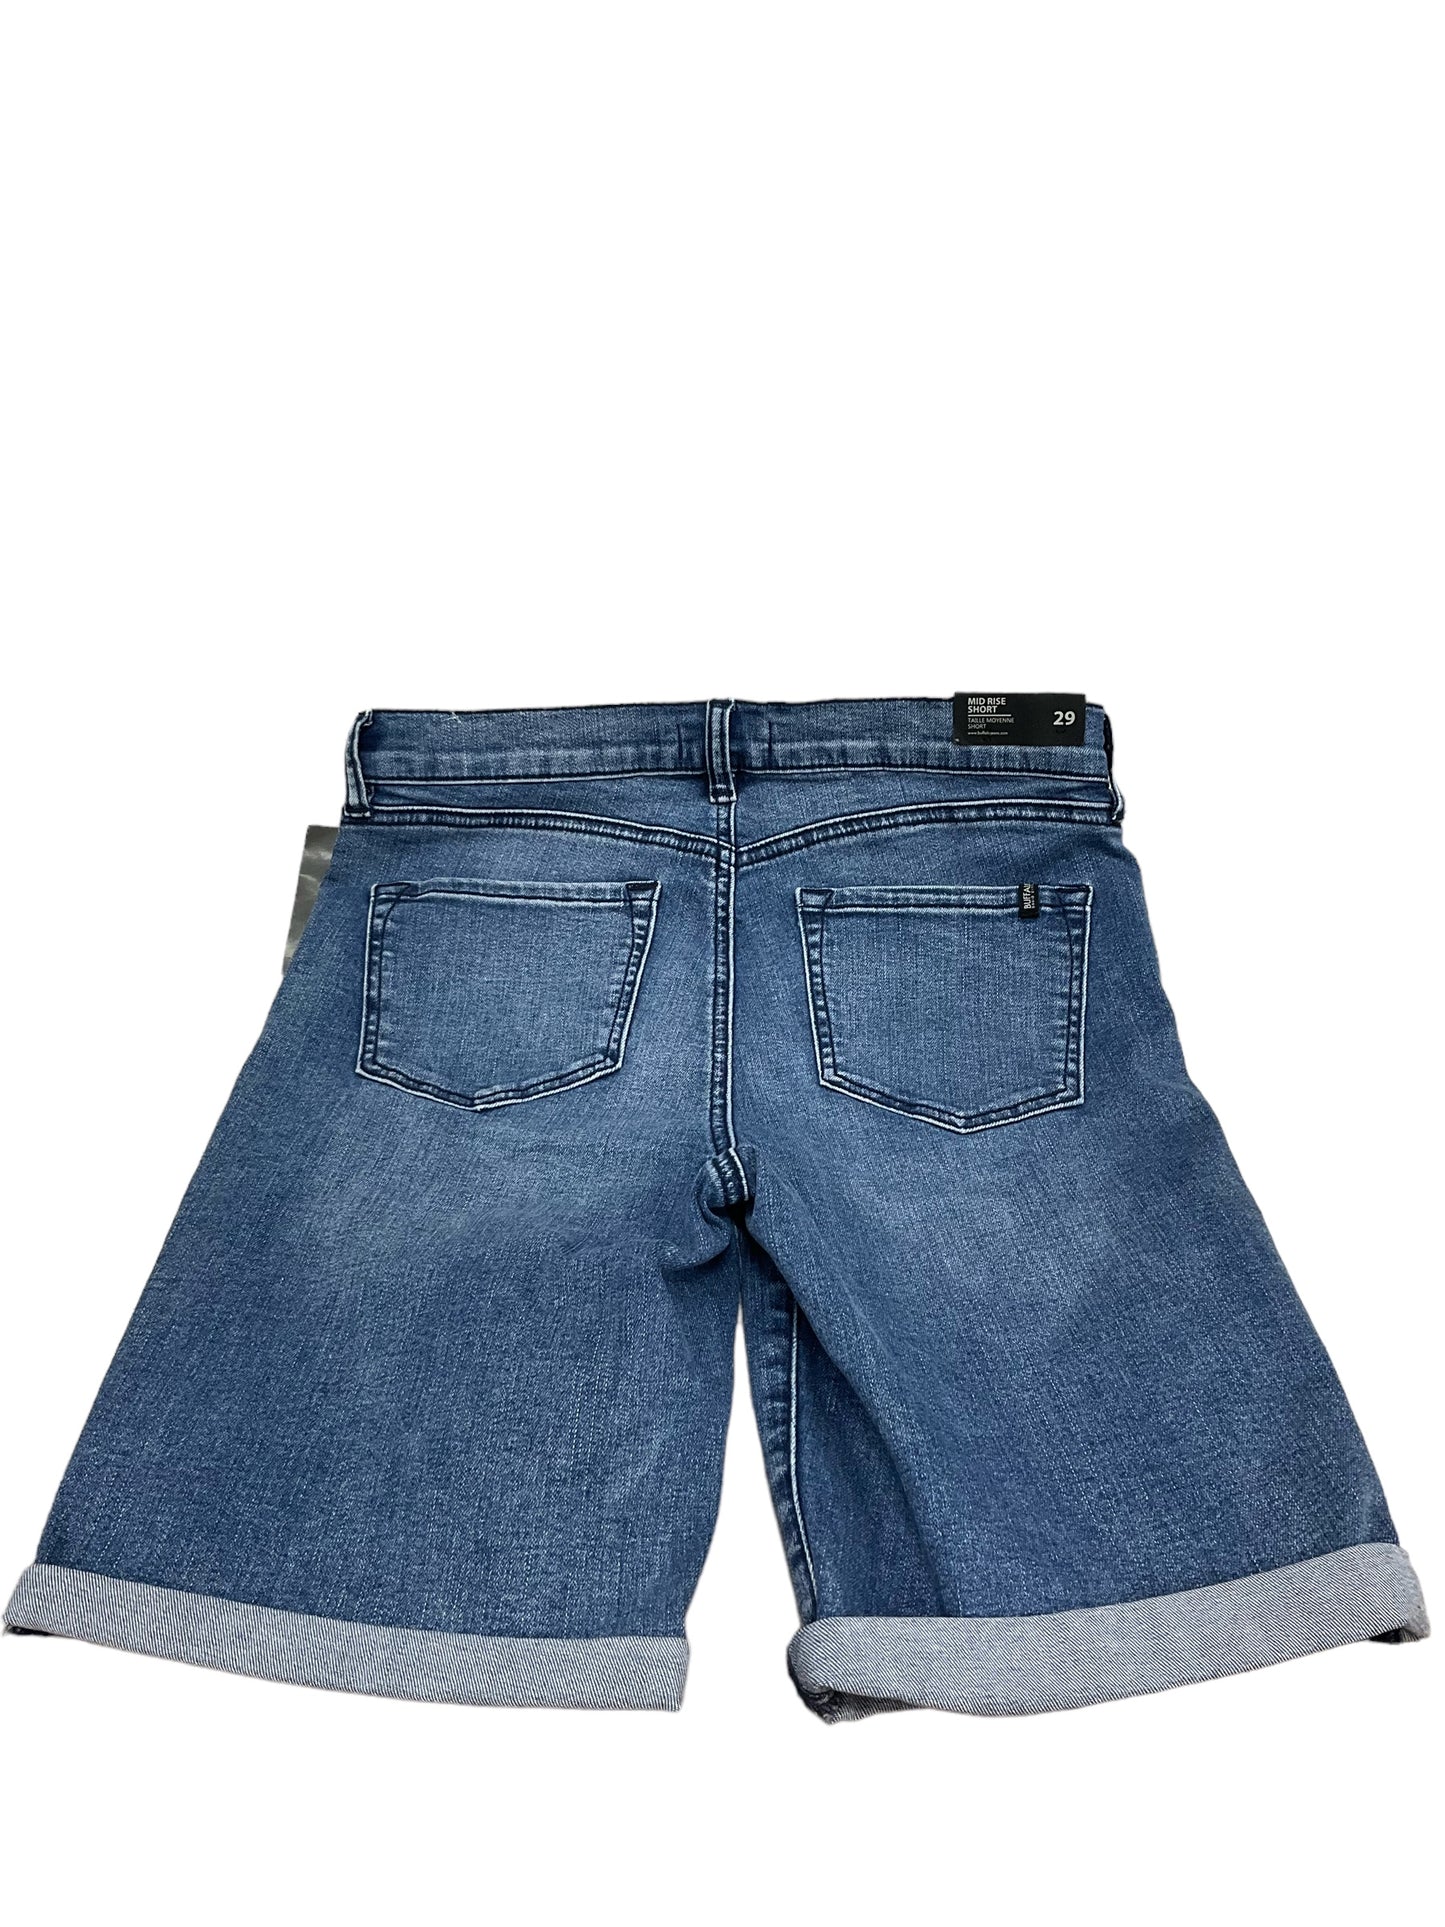 Shorts By Buffalo David Bitton  Size: 8